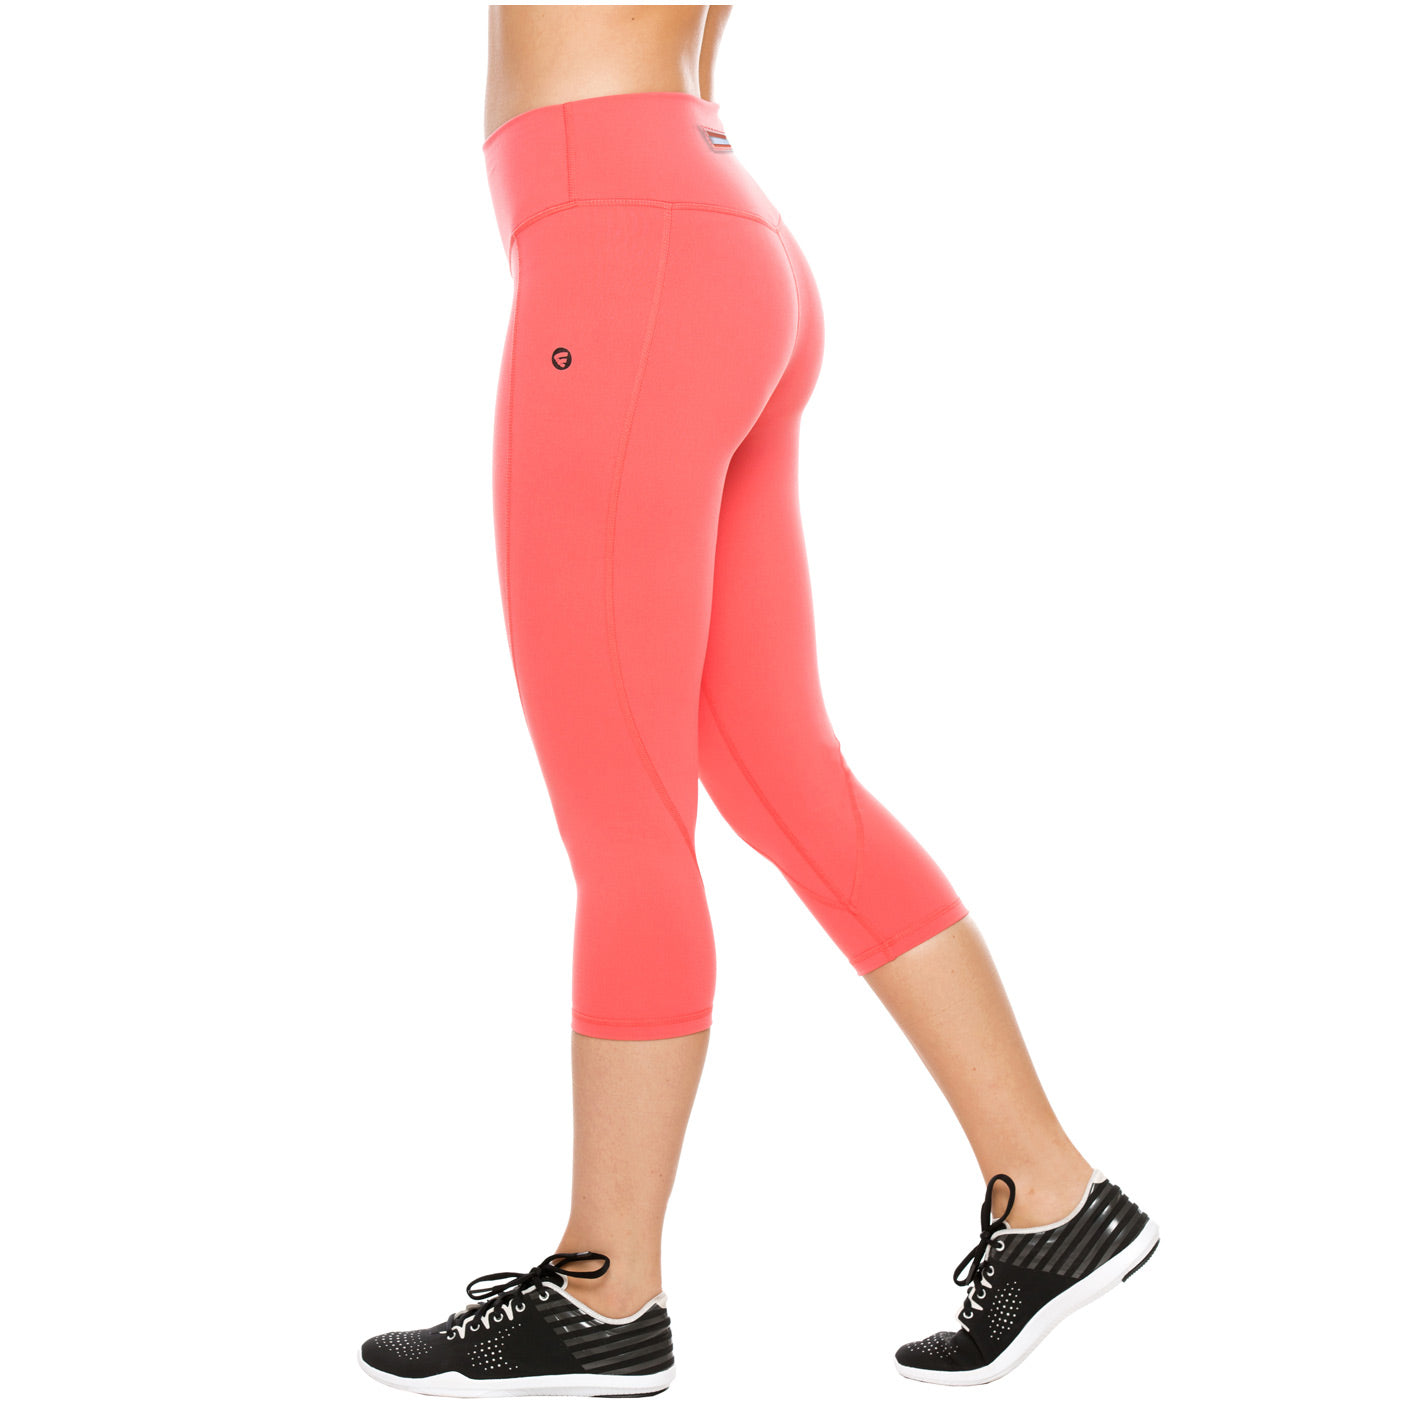 B91xZ Yoga Pants for Womens Mid Rise Slim-Leg Capri Leggings,Pink L 